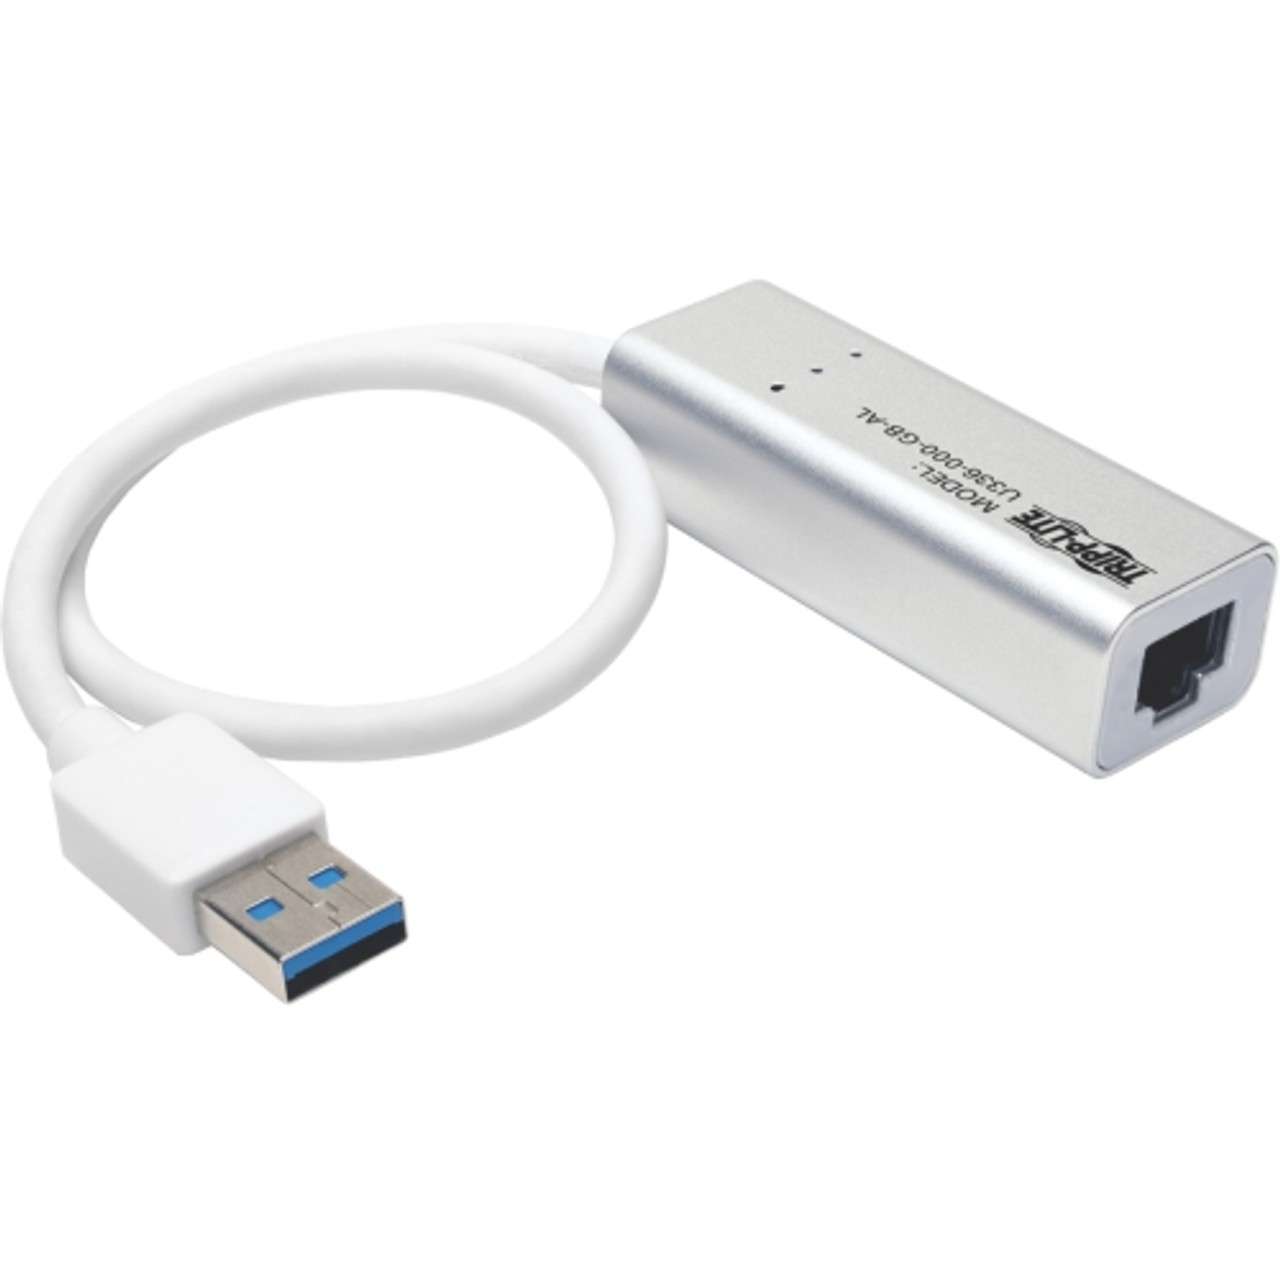 U336-000-GB-AL Tripp Lite USB 3.0 Superspeed Gigabit Ethernet Network Adapter 10/100/1000